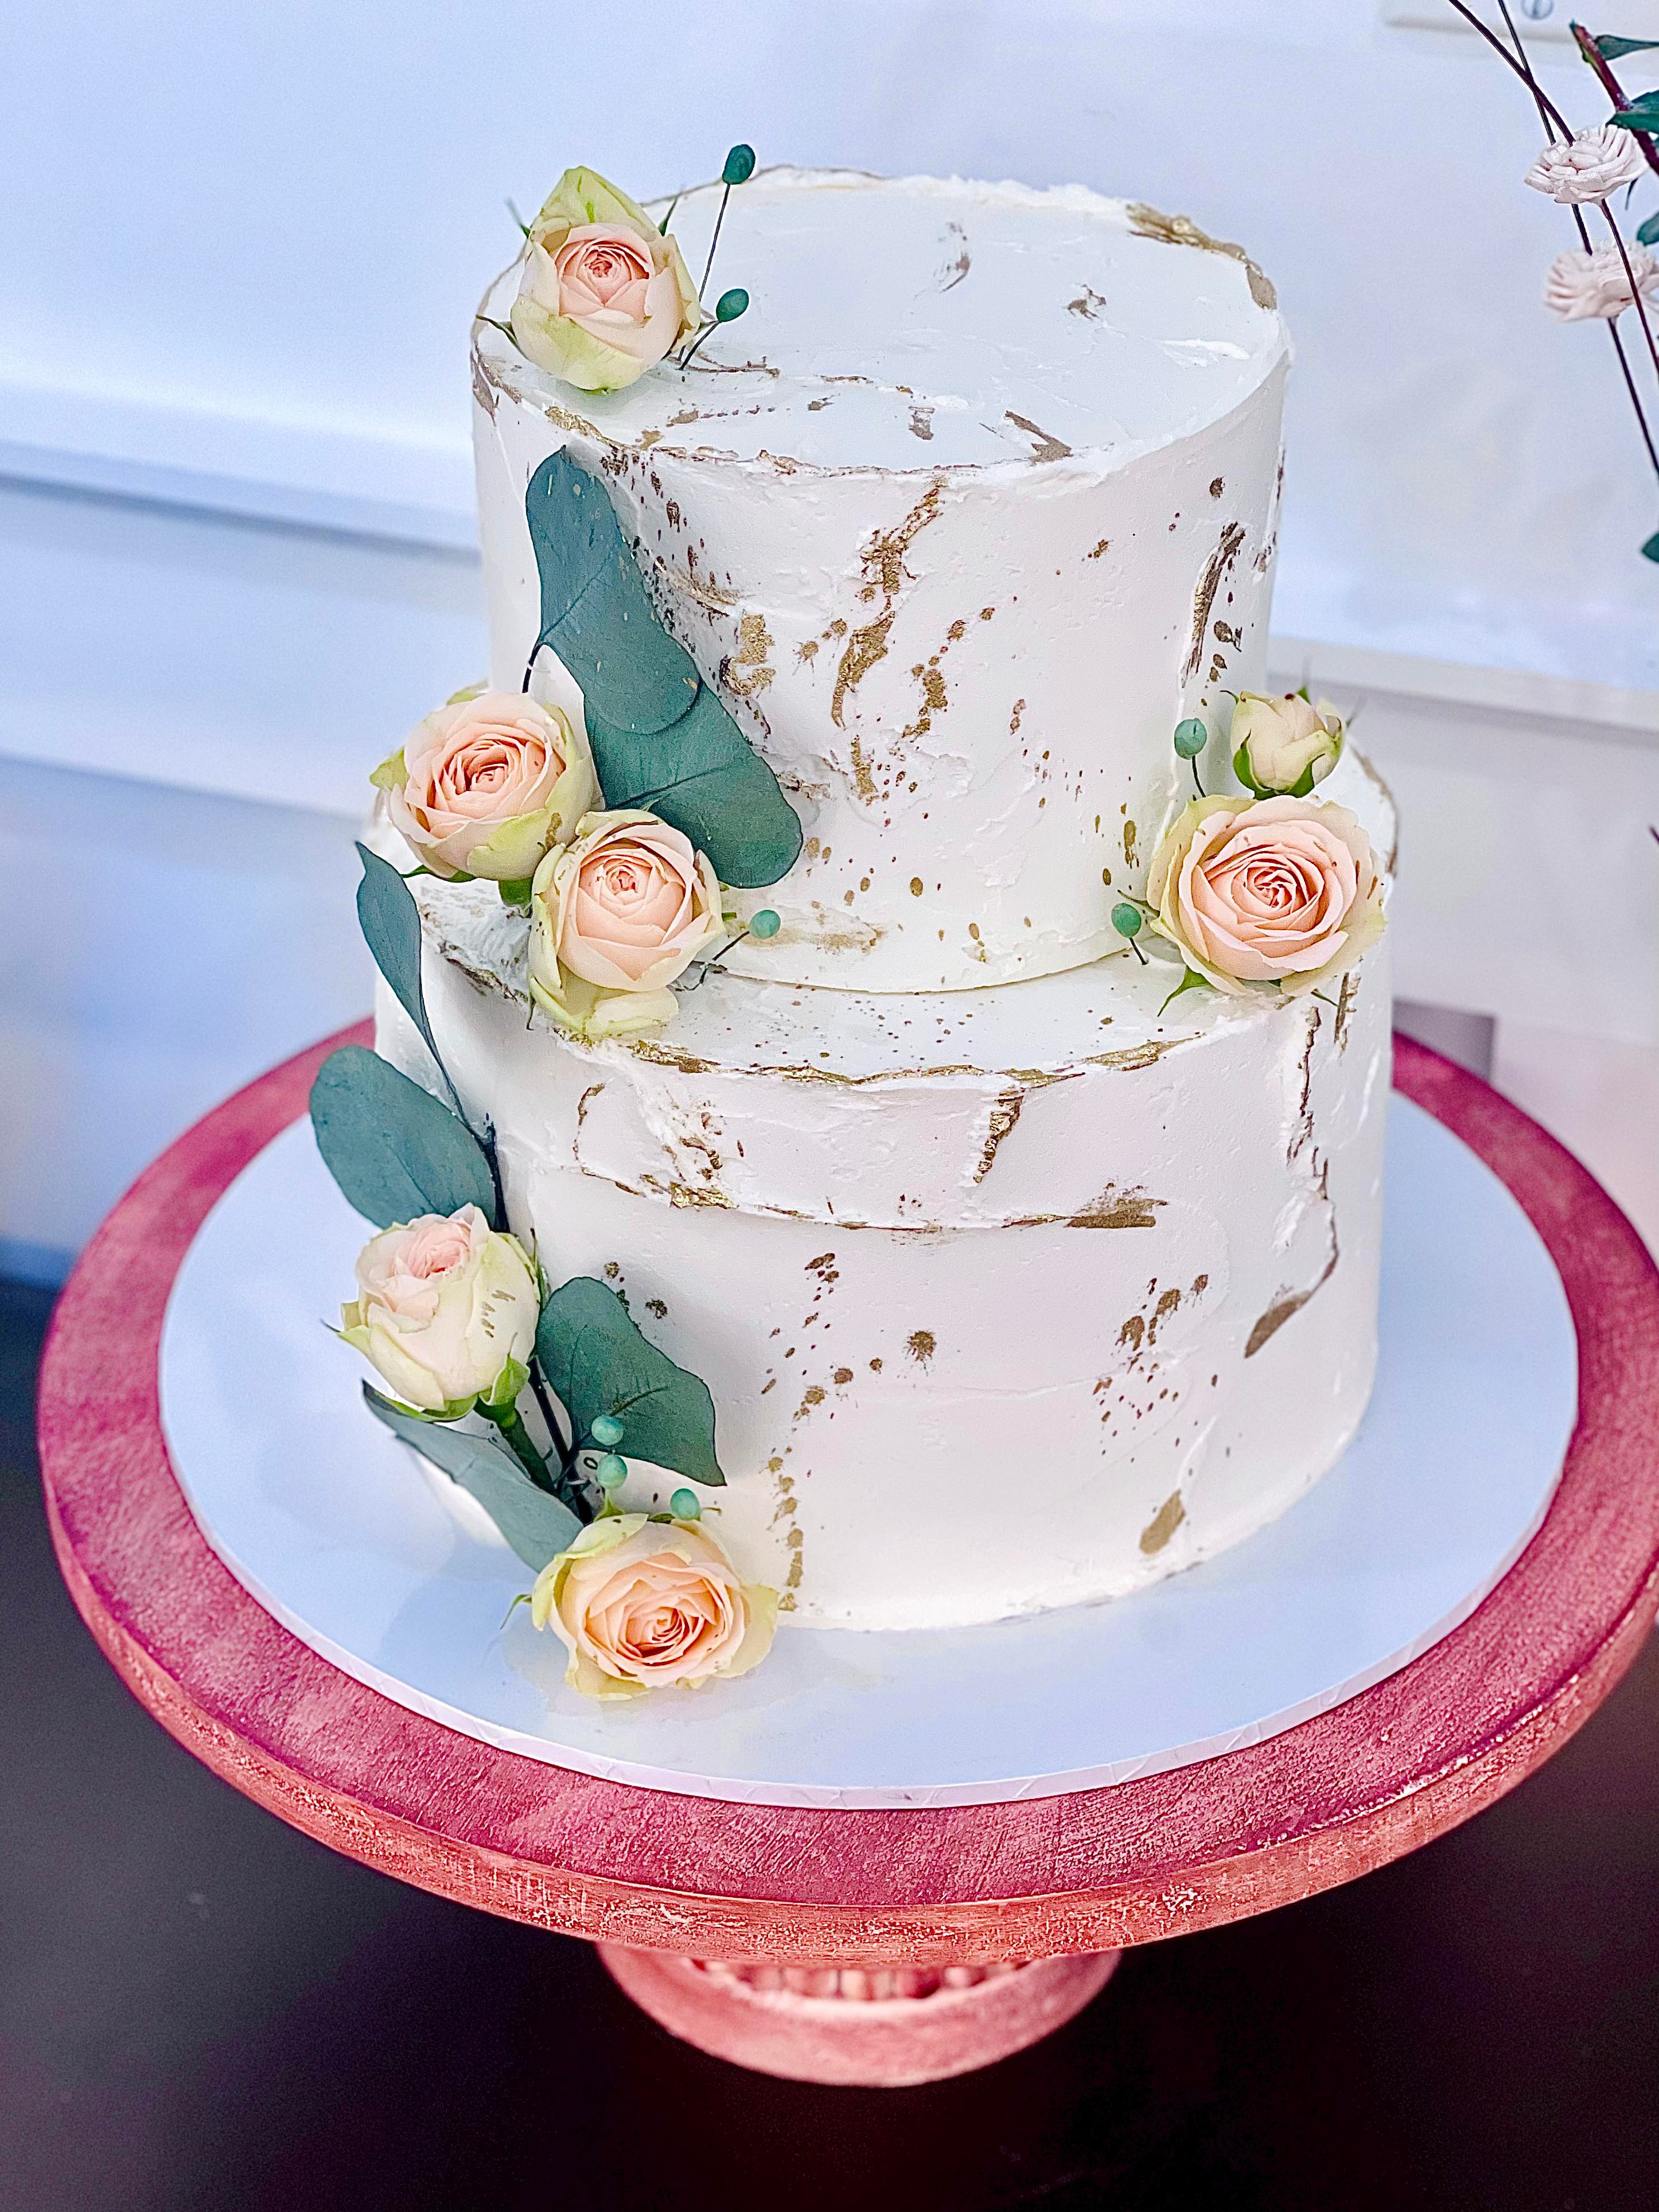 Cake by Anna